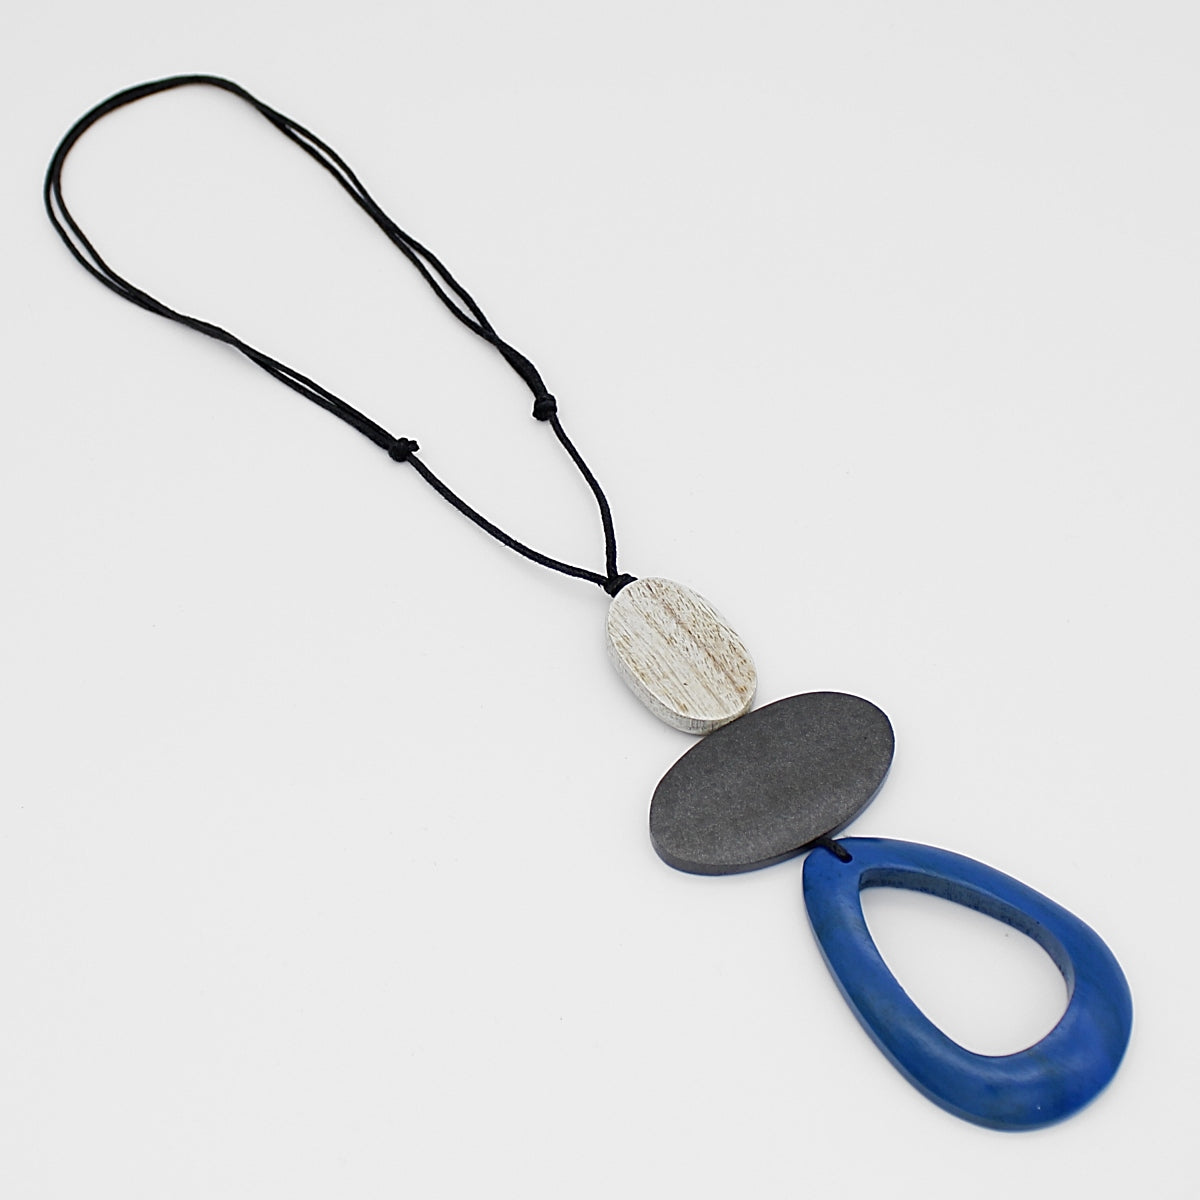 Blue Calia Pendant Necklace